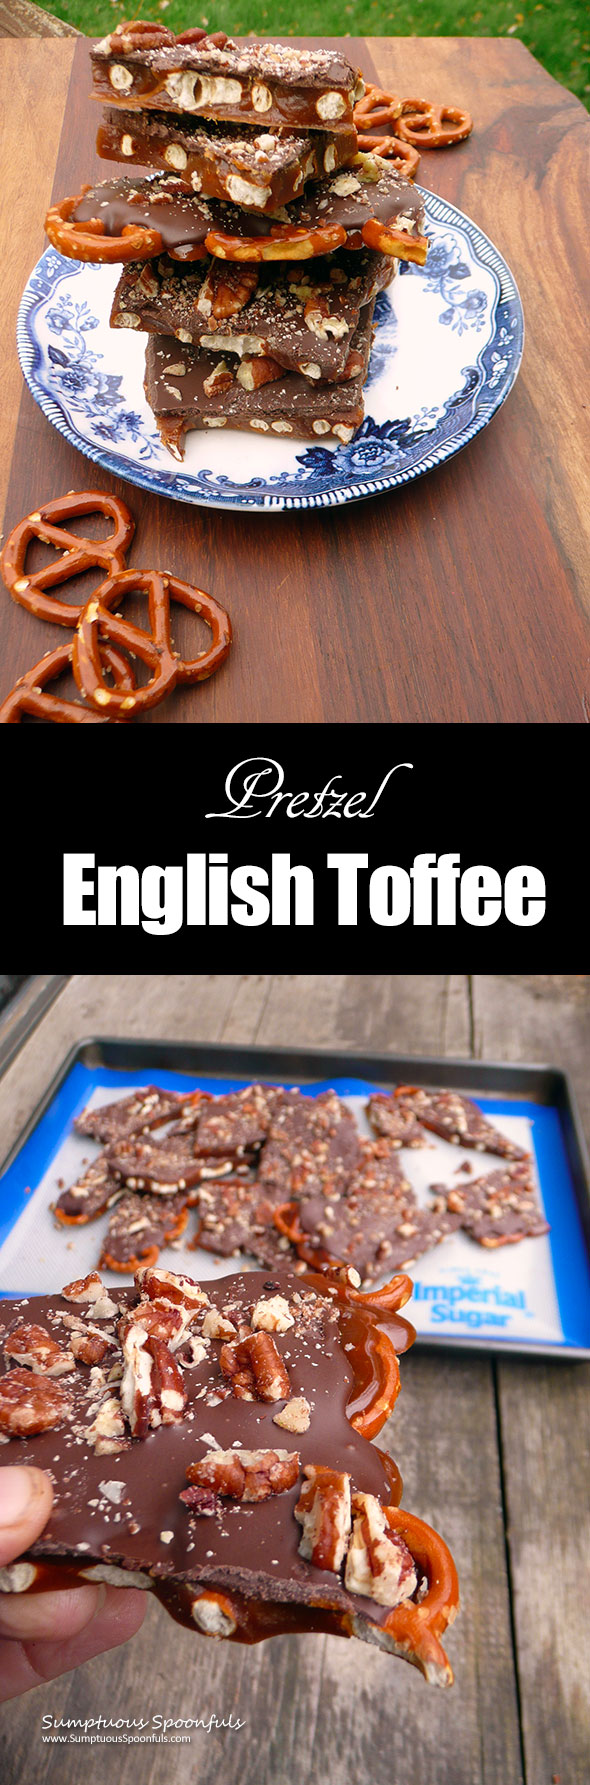 Pretzel English Toffee ~ Sumptuous Spoonfuls #dessert #candy #ImperialSugar